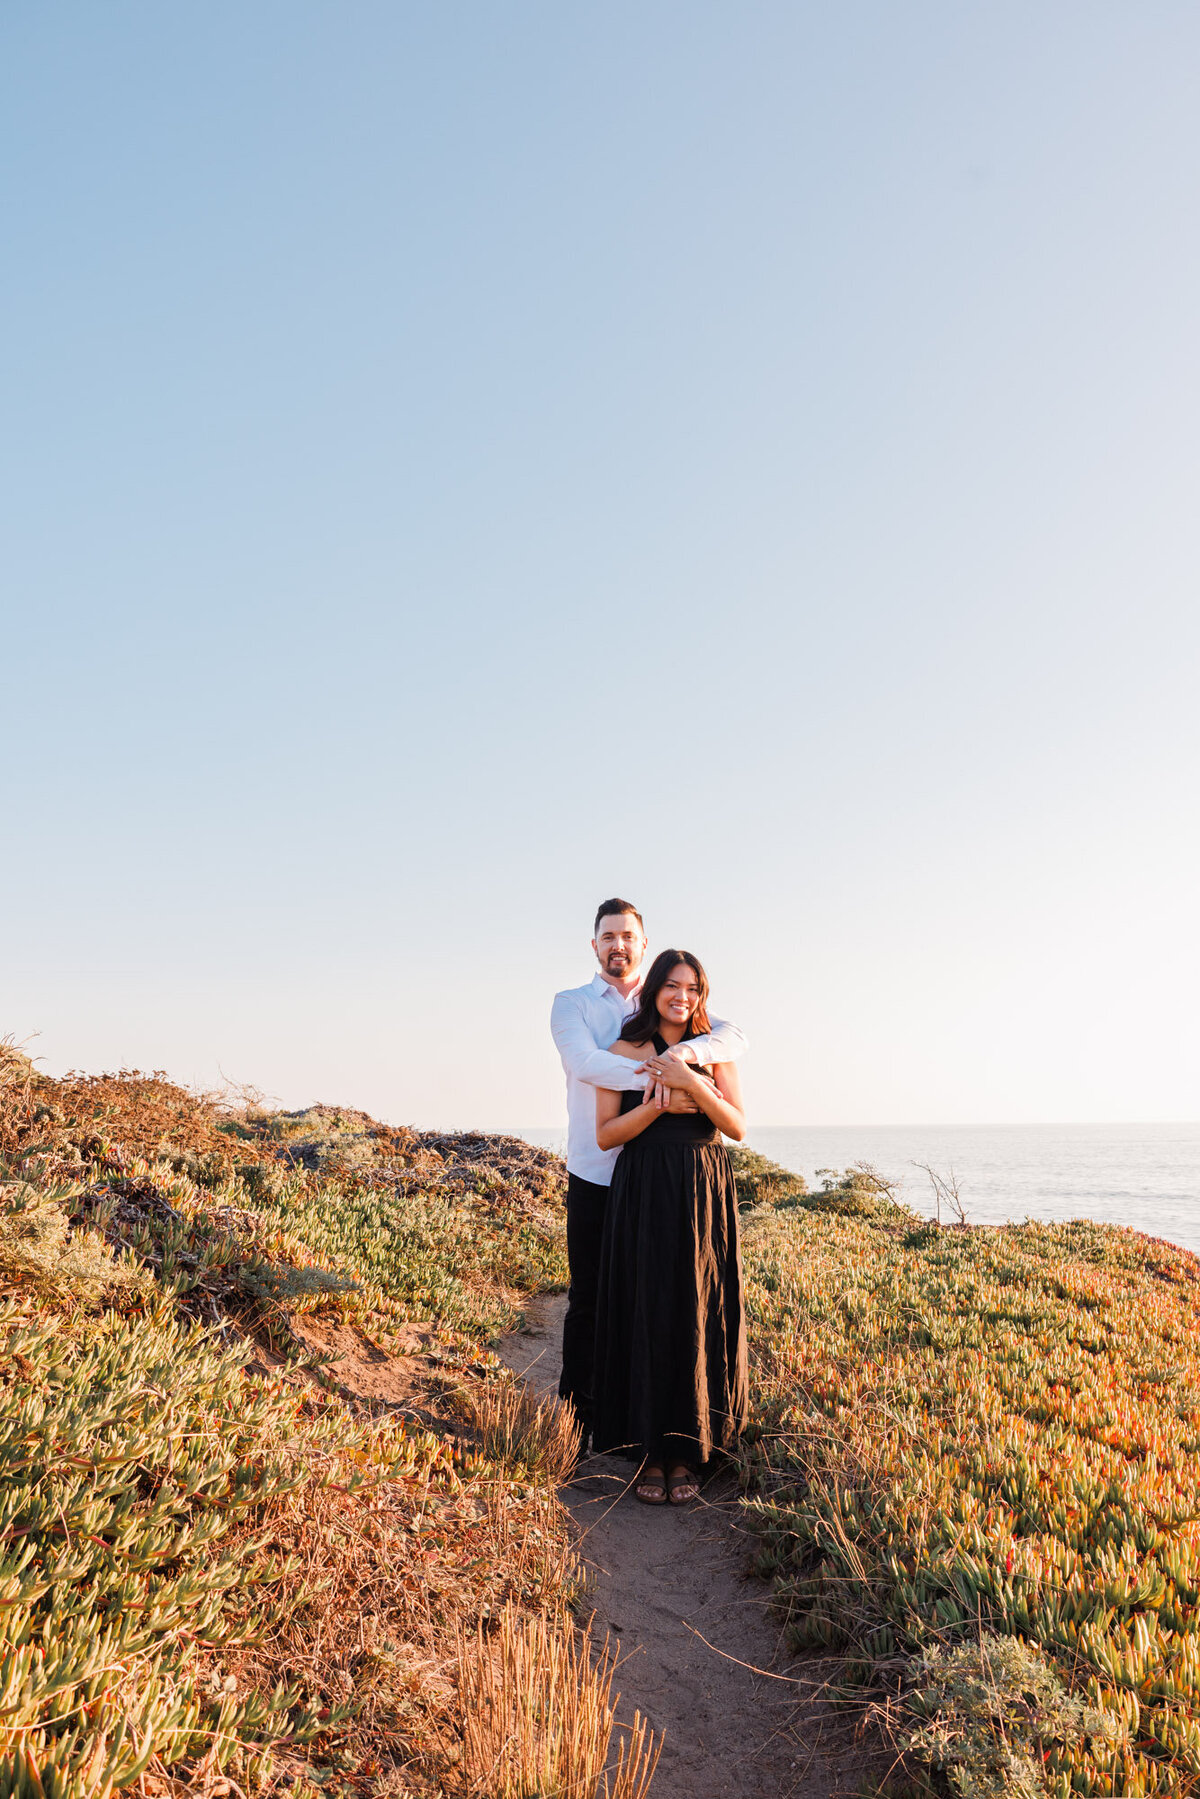 Kyle Woolum + Stephanie-Proposal Engagement-Half Moon Bay-Dunes Beach-San Francisco Wedding Photographer-San Francisco Photographer-Half Moon Bay Photographer-Emily Pillon Photography-S-092323-57